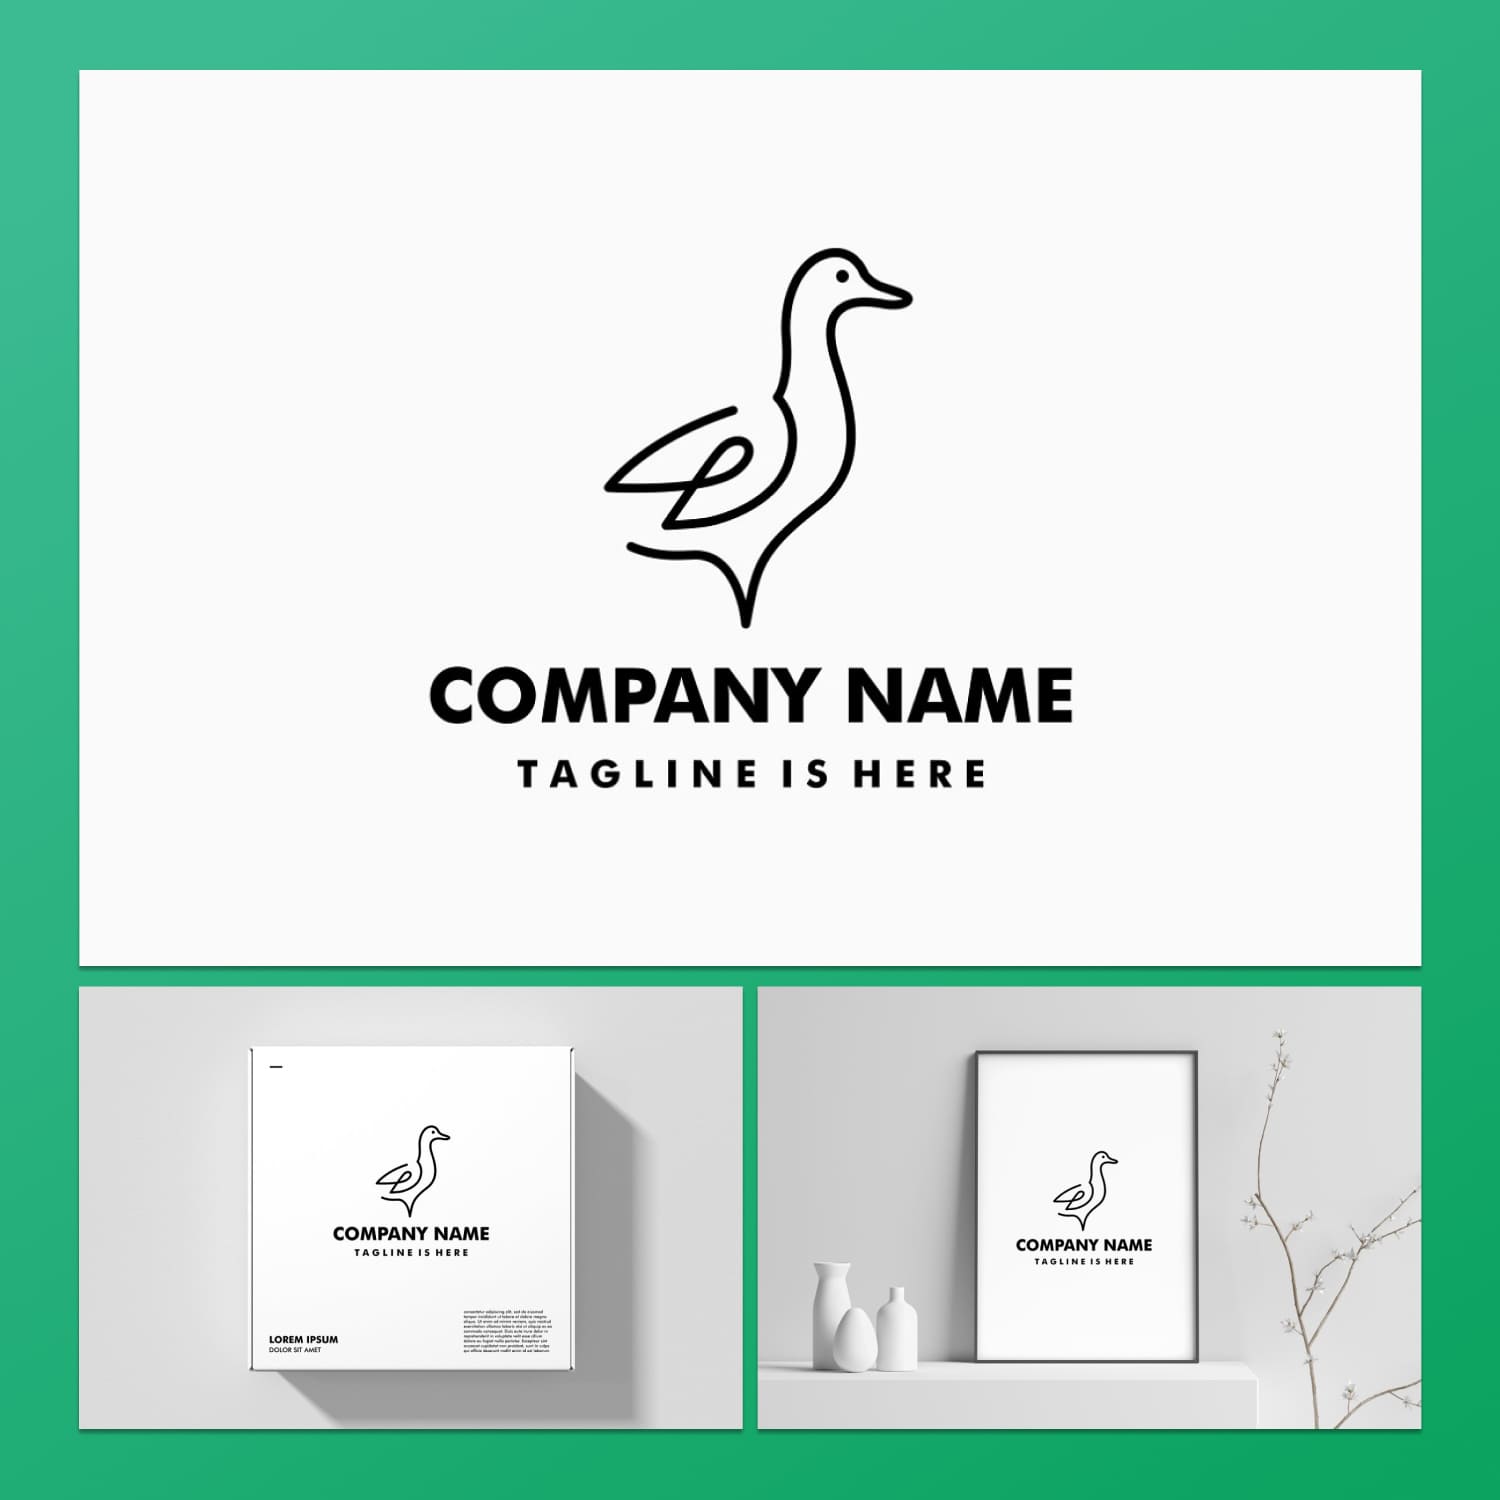 Duck logo.